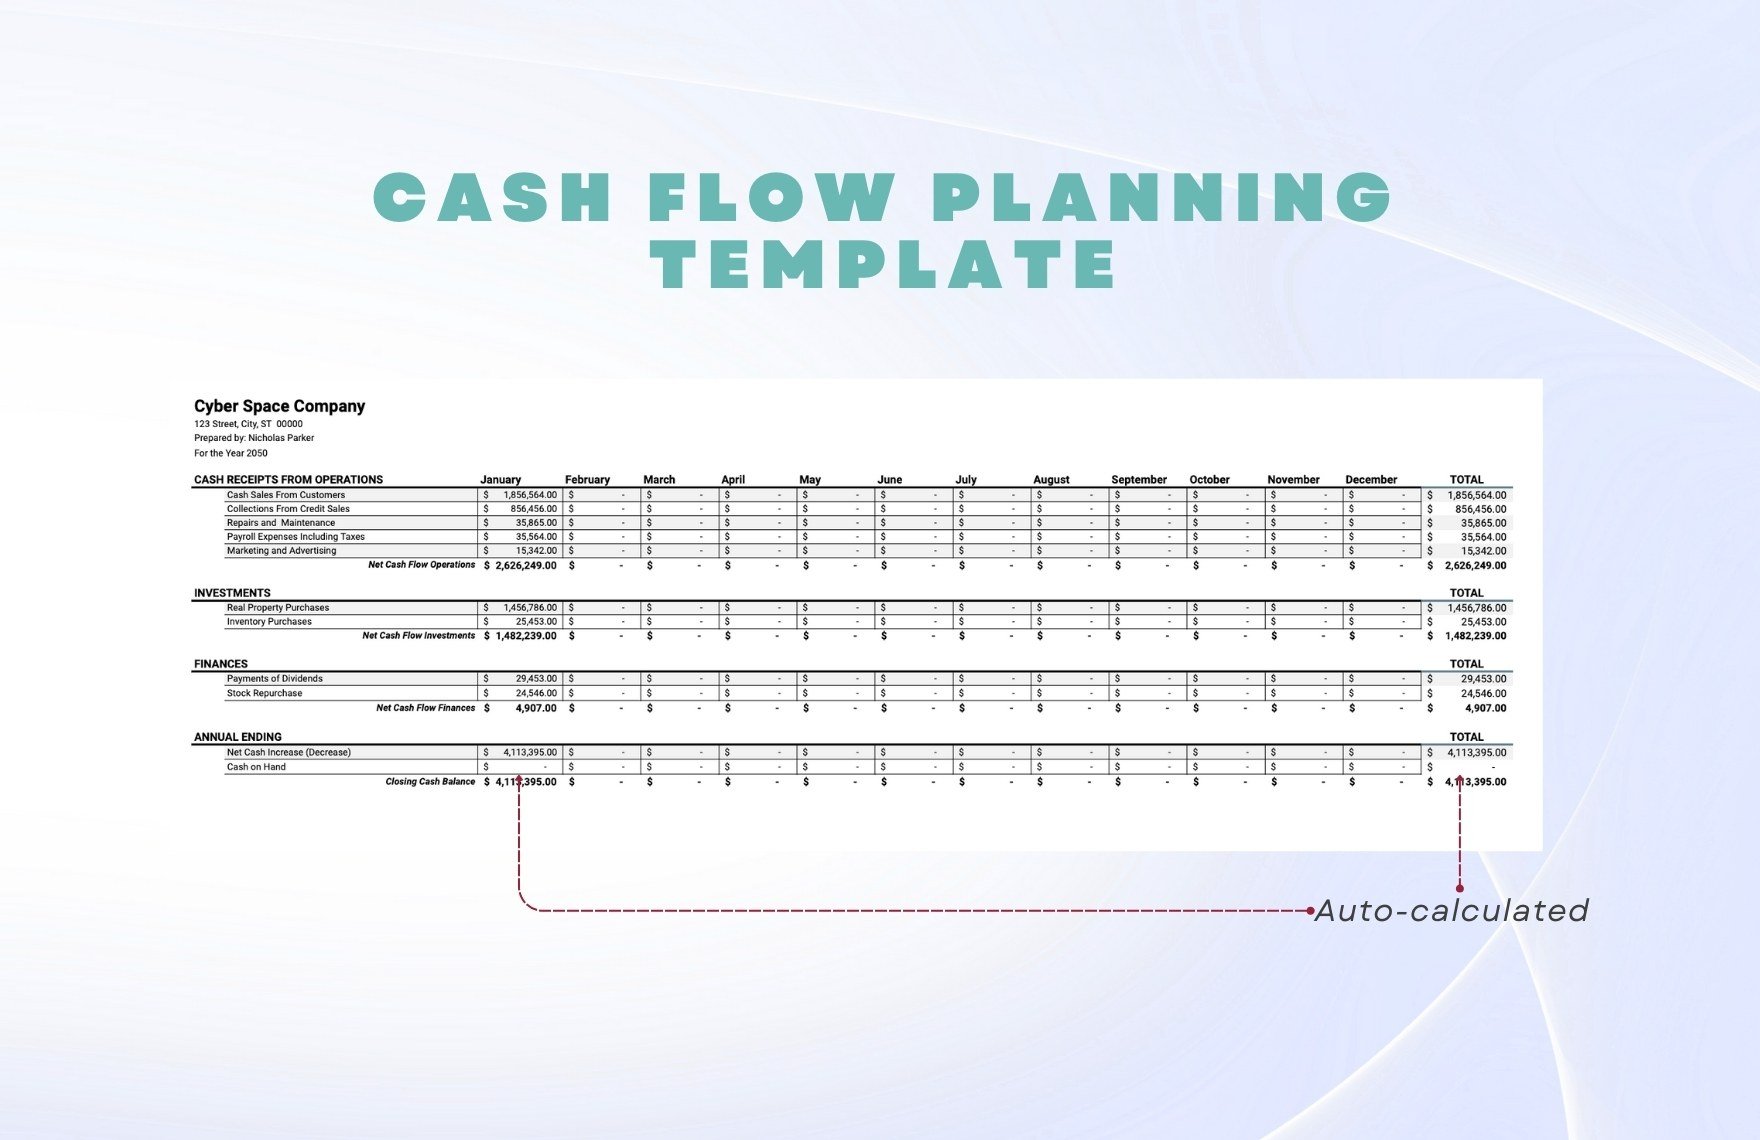 Cashflow Planning Template